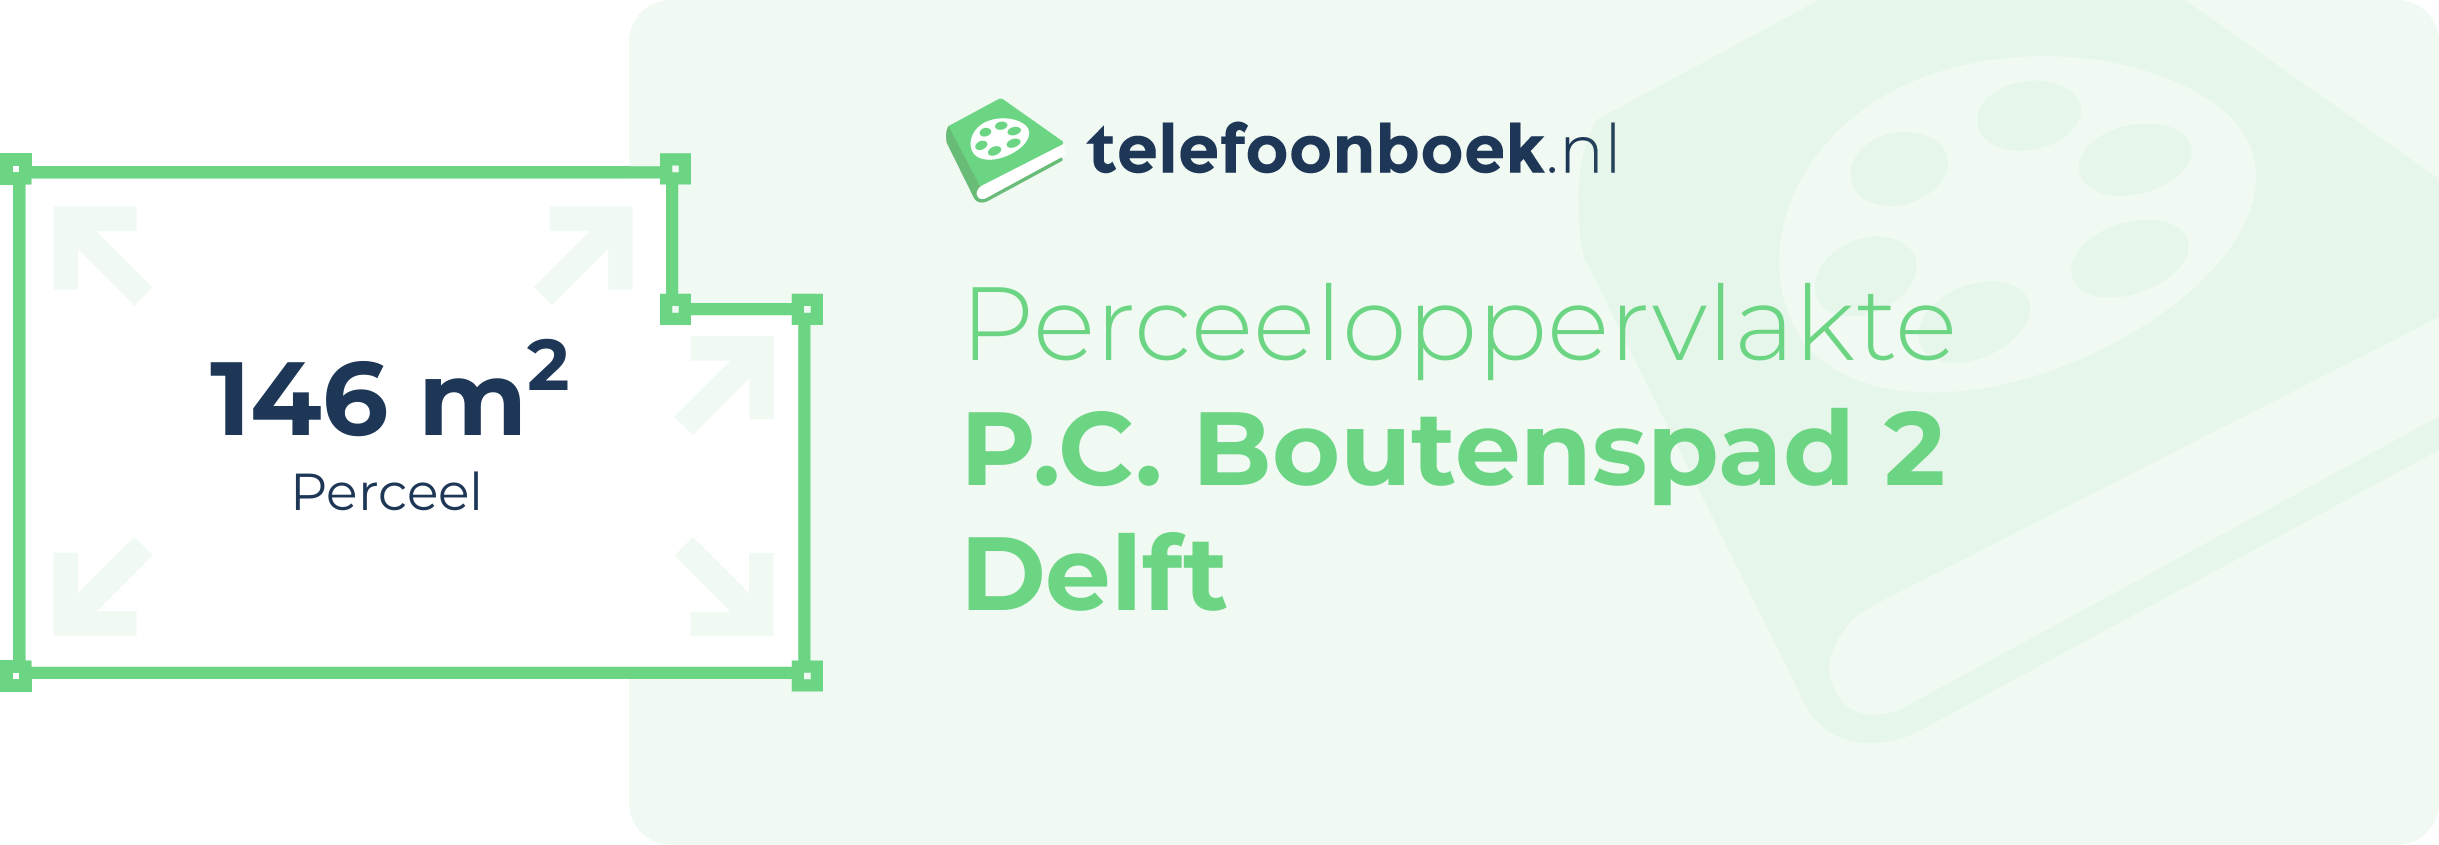 Perceeloppervlakte P.C. Boutenspad 2 Delft